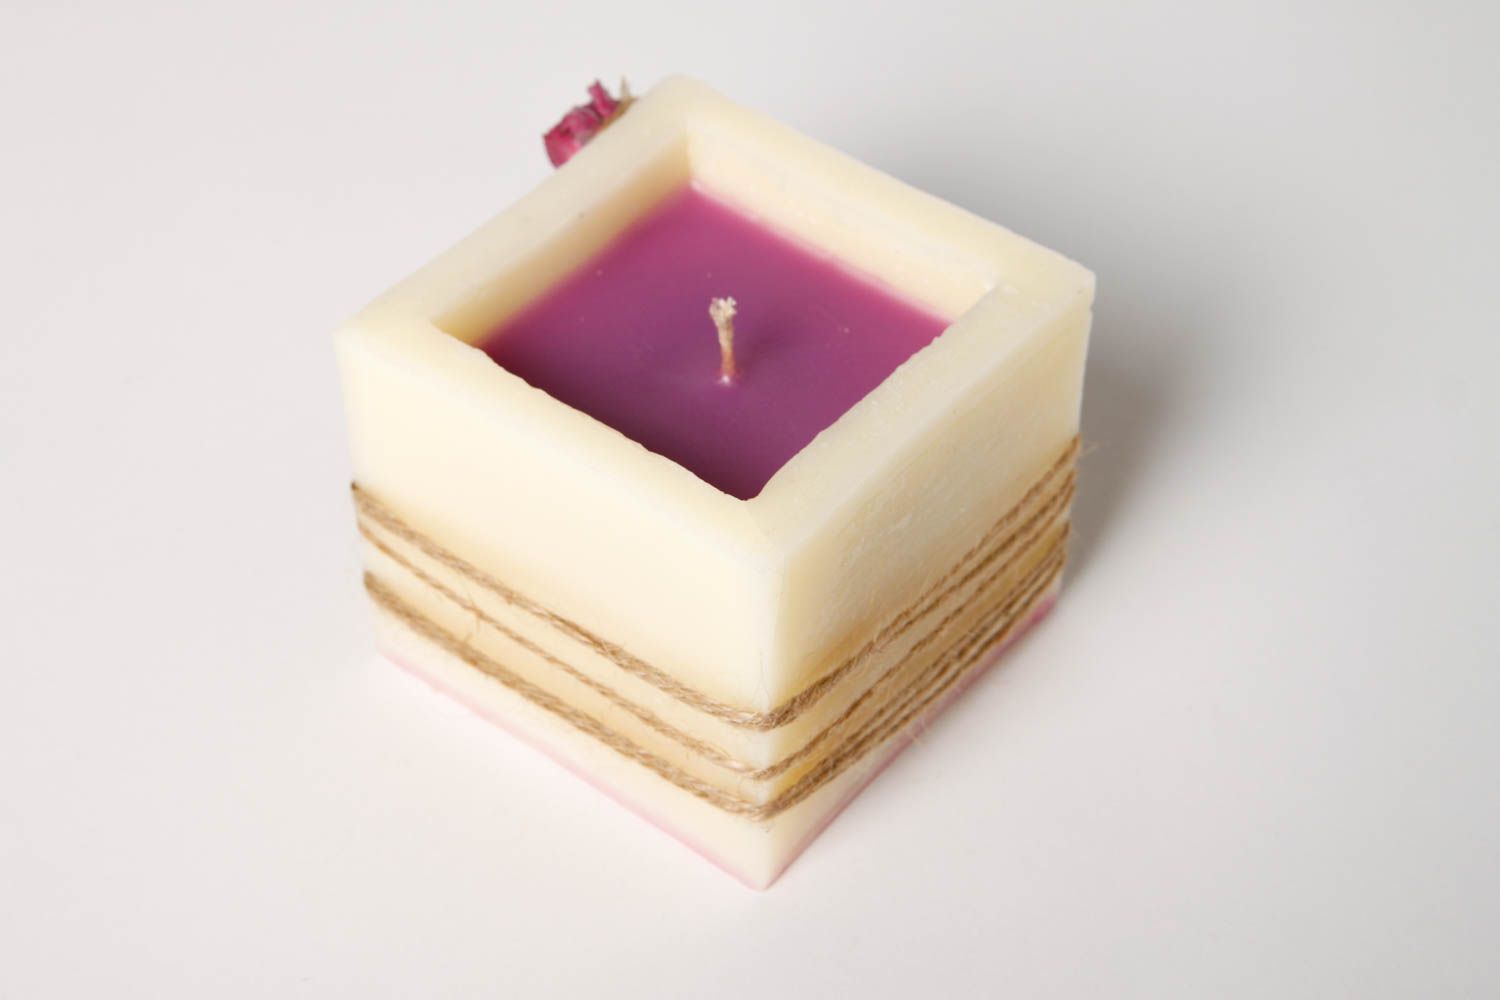 Unusual handmade paraffin candle designs housewarming gifts room decor ideas photo 3